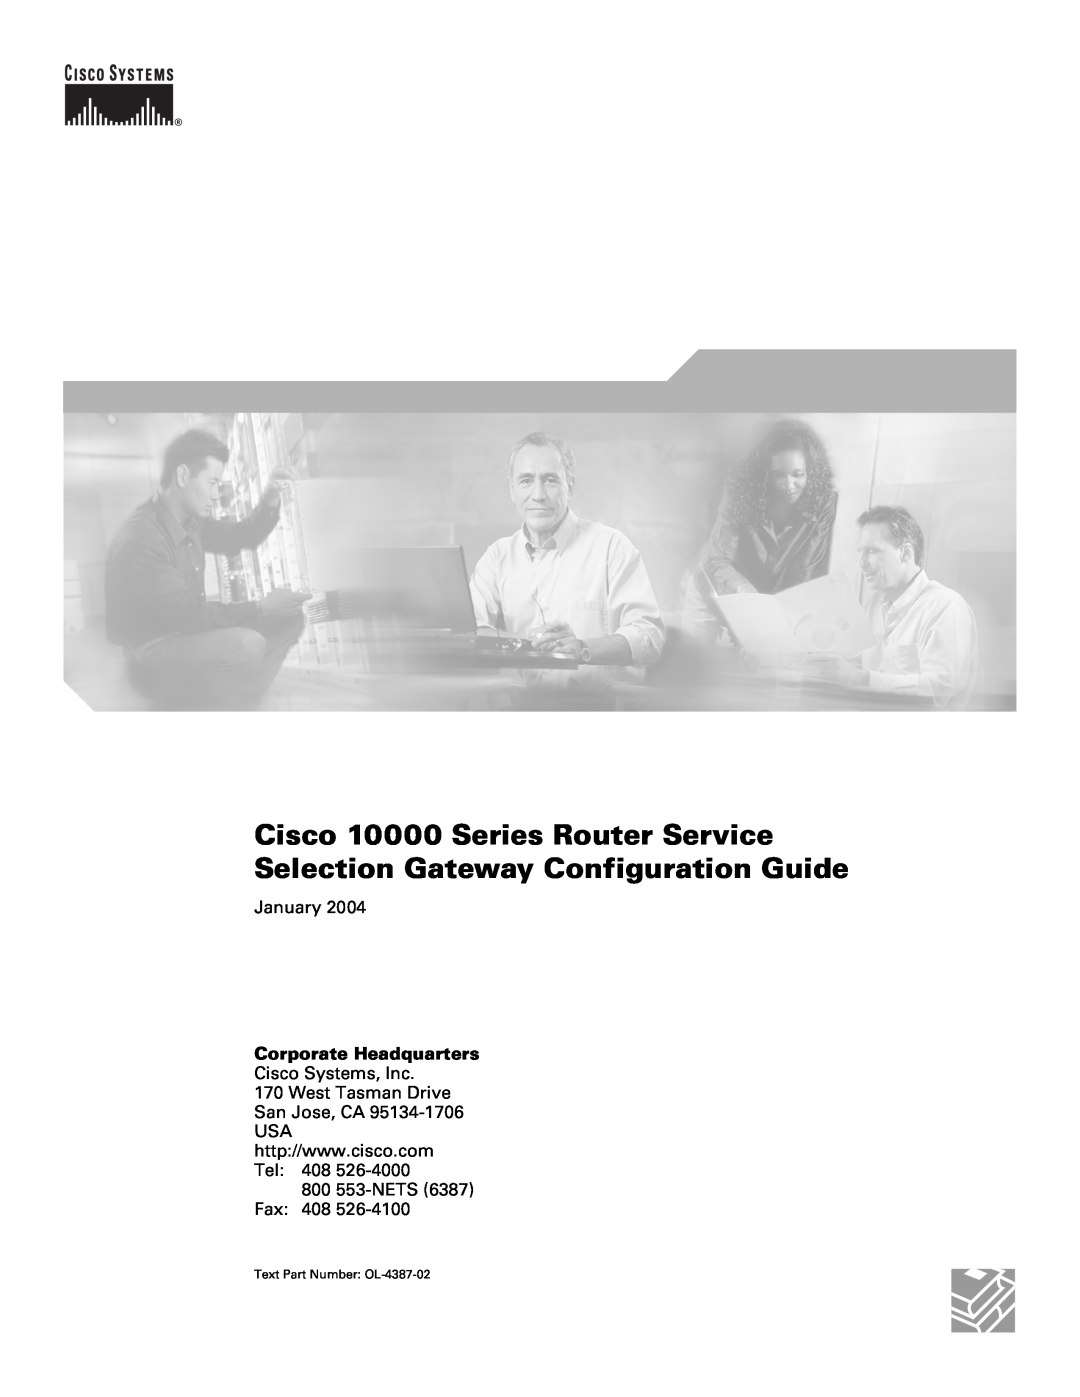 Cisco Systems OL-4387-02 manual January, Corporate Headquarters, Cisco Systems, Inc 170 West Tasman Drive San Jose, CA 